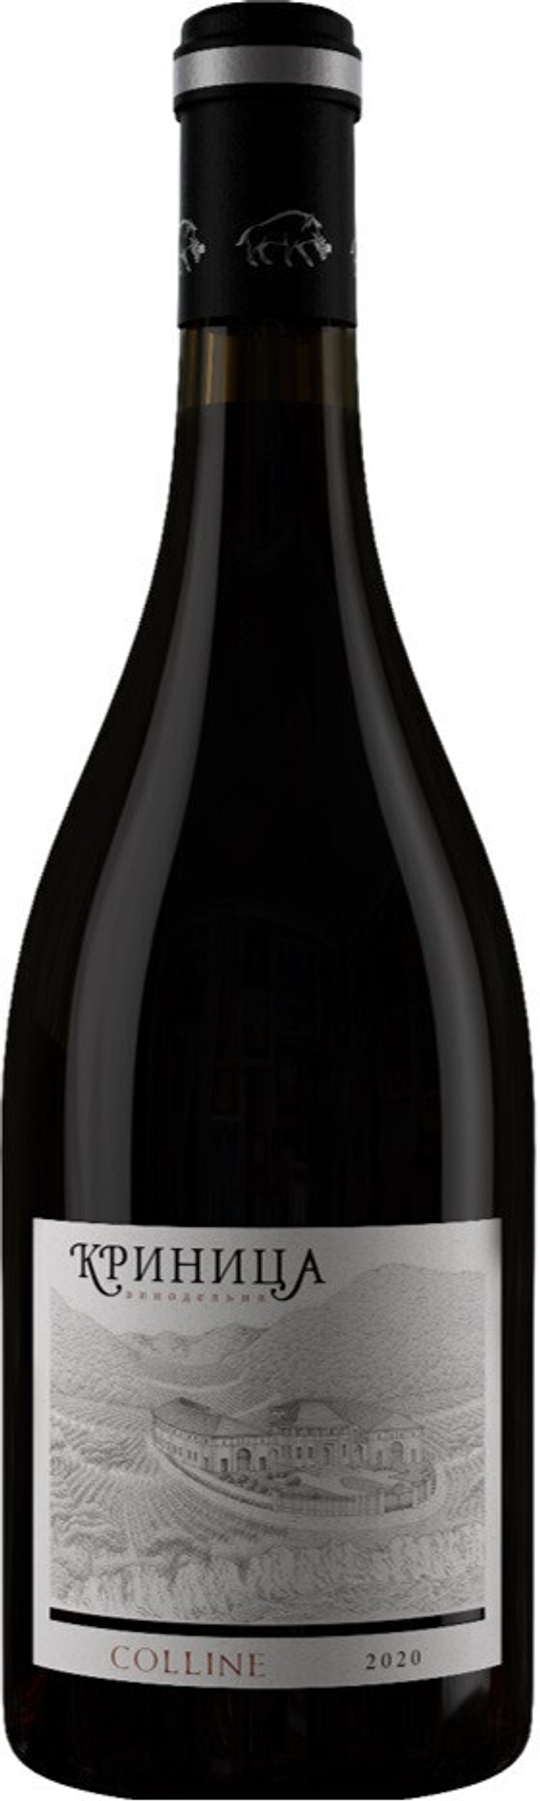 Вино Винодельня Криница Colline, 0,75 л.